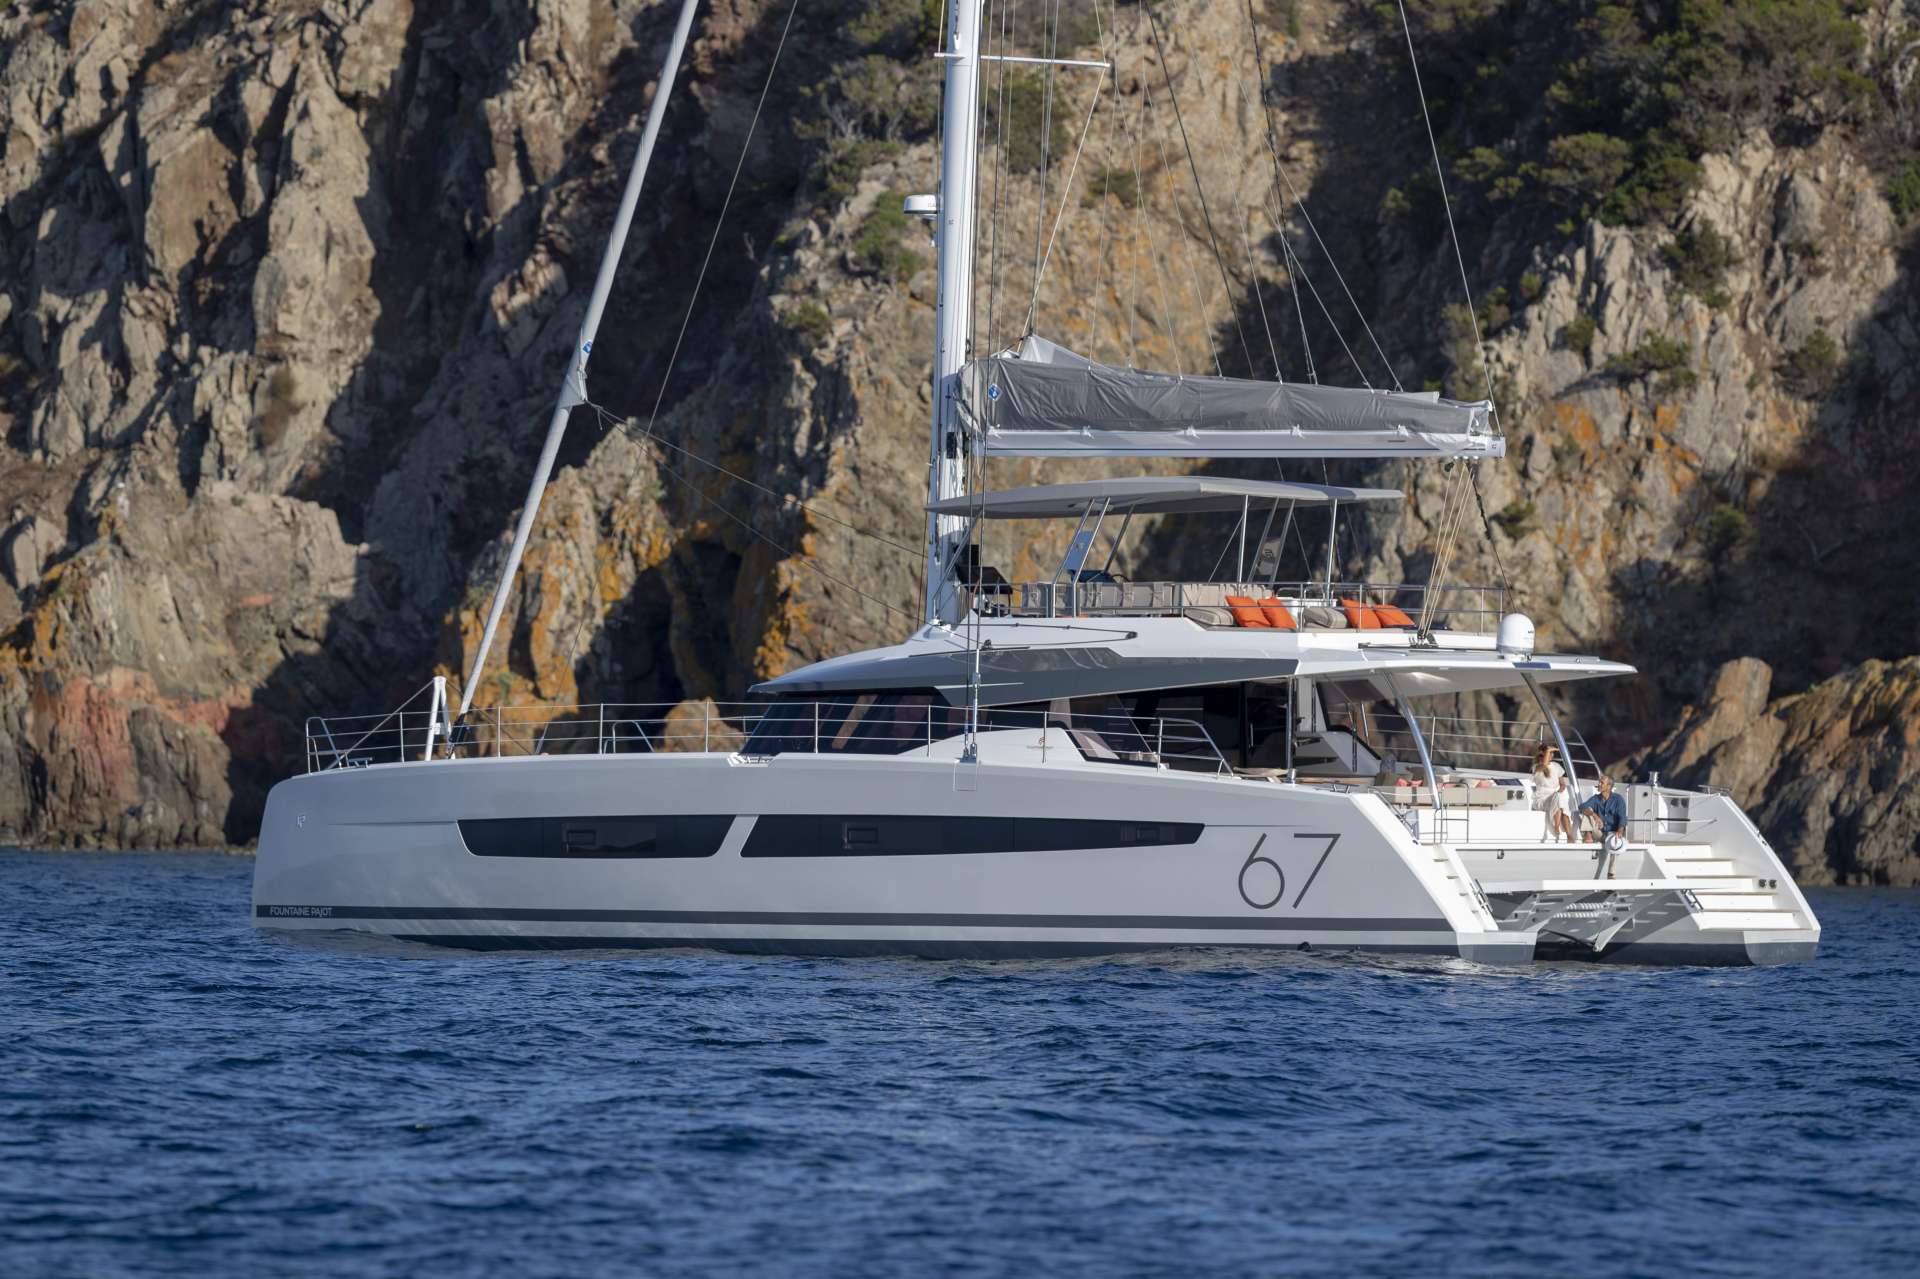 Croatia luxury catamarans for rental in Pula